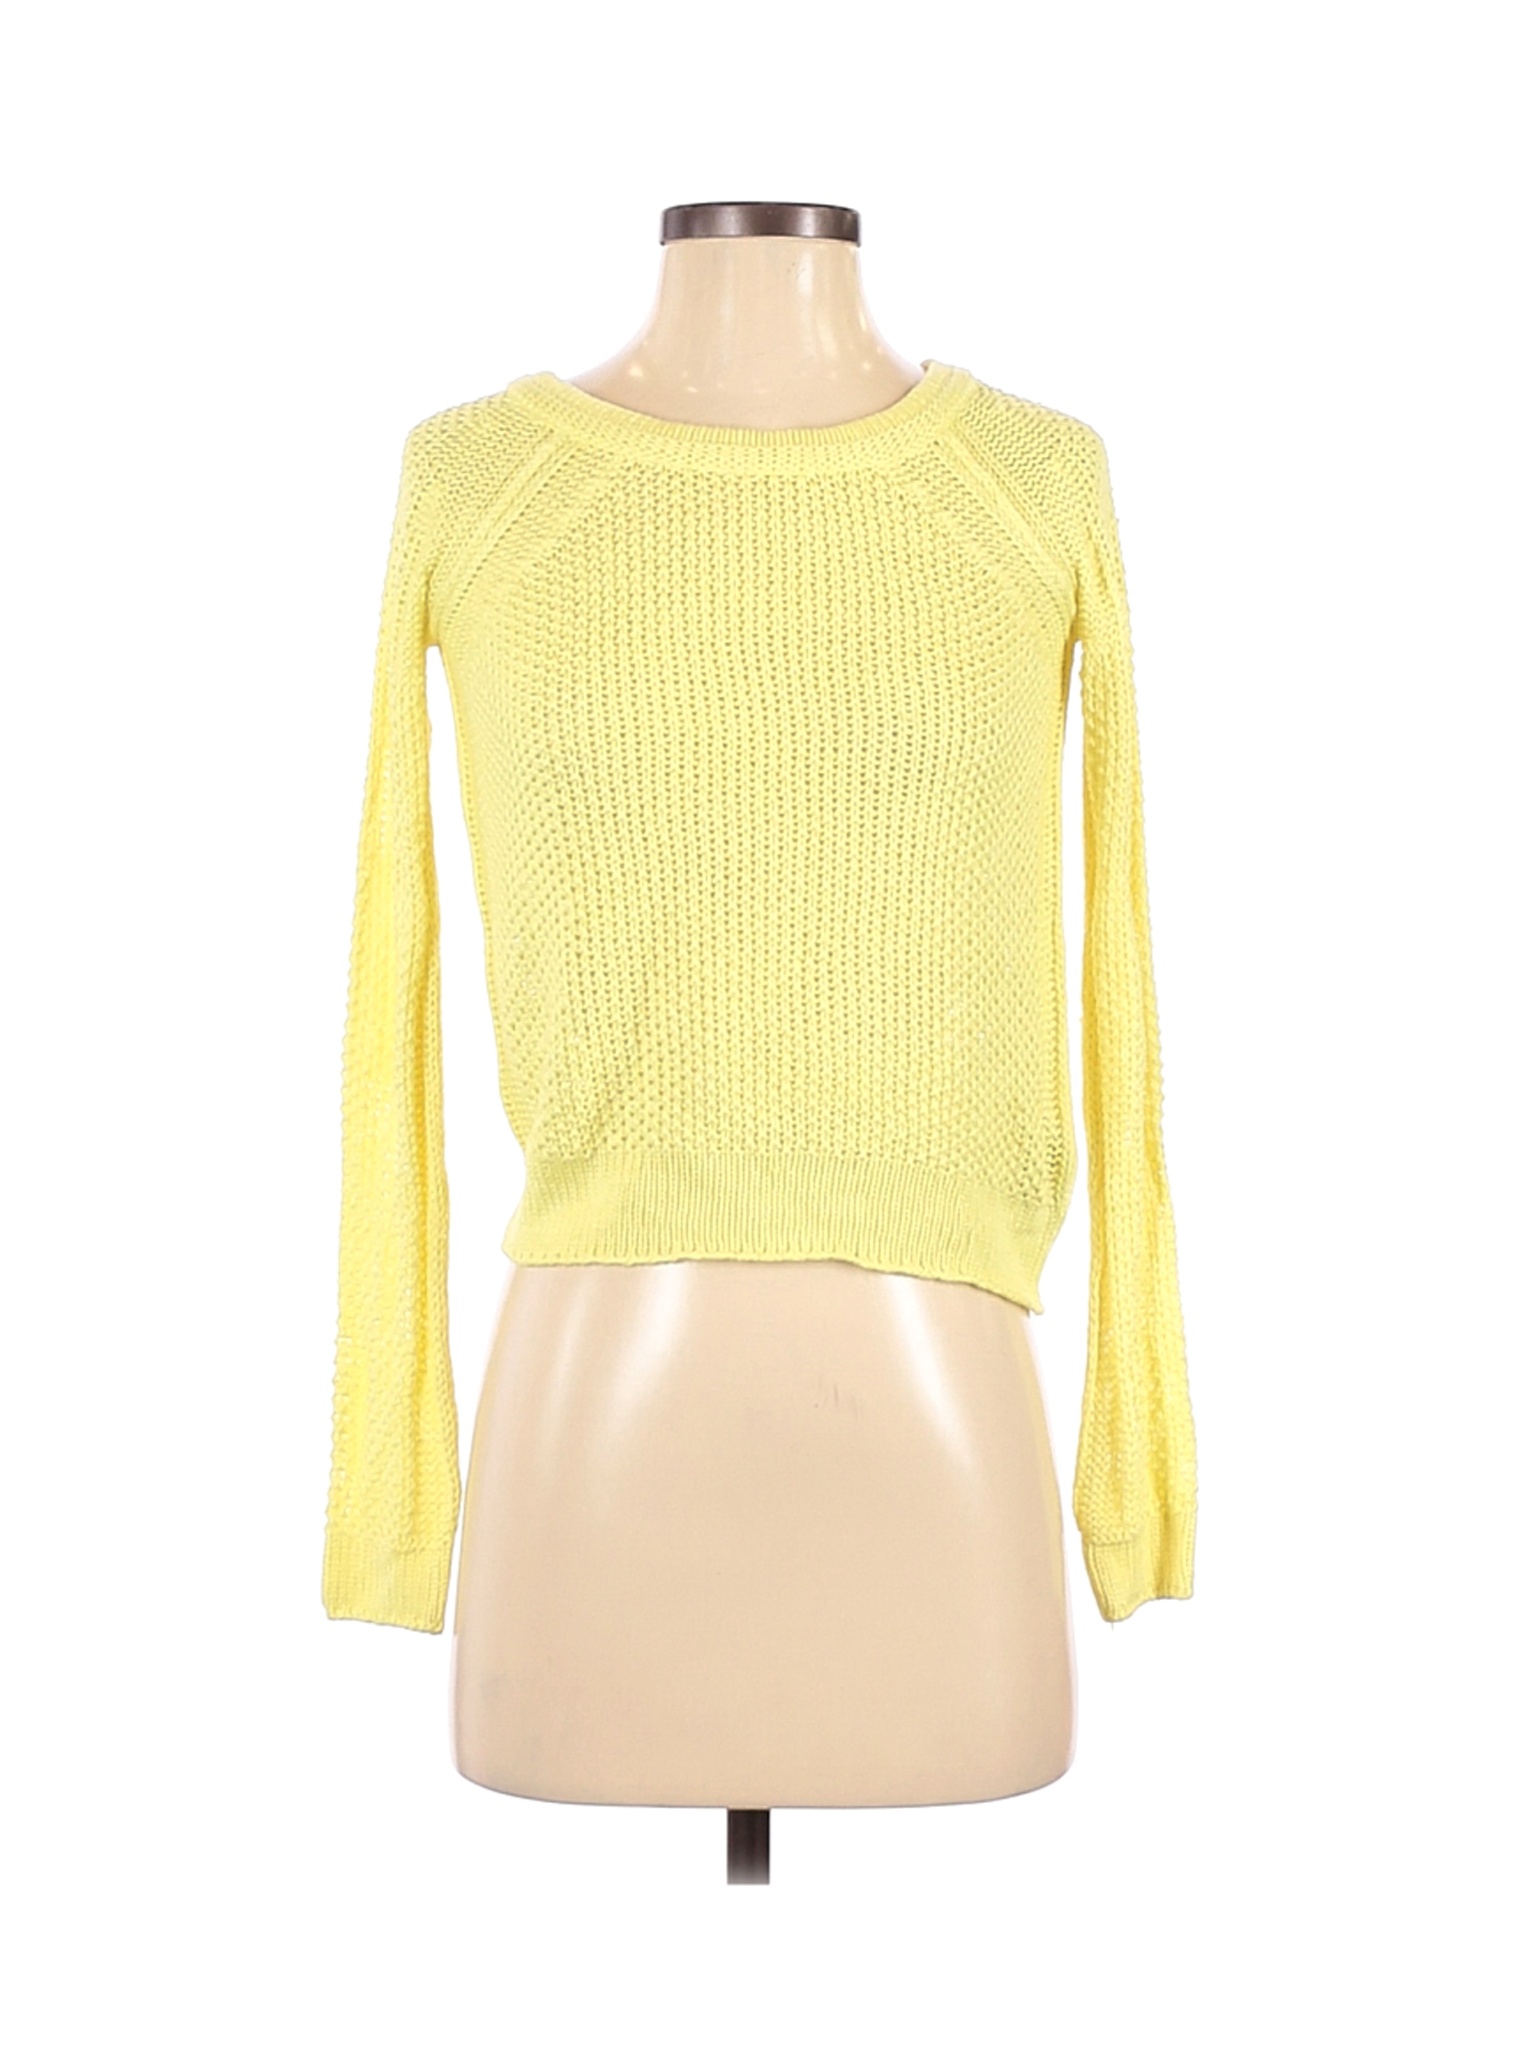 Forever 21 Women Yellow Pullover Sweater S | eBay